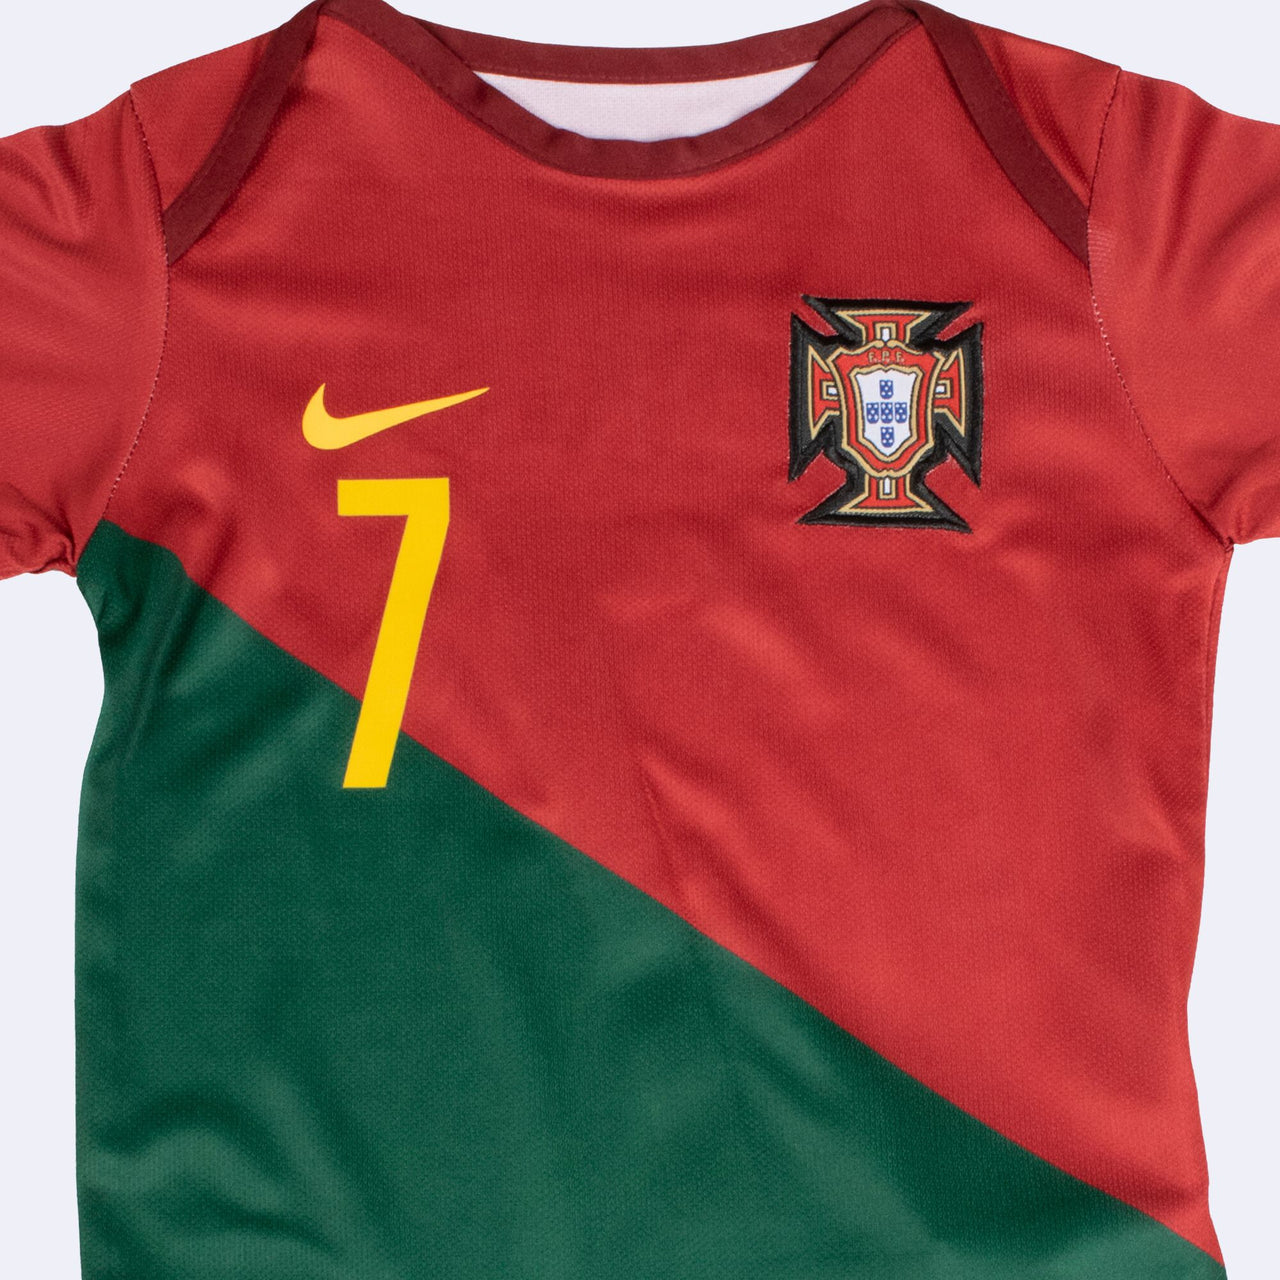 Portugal 23/24 Babytrikot mit Ronaldo-Tag